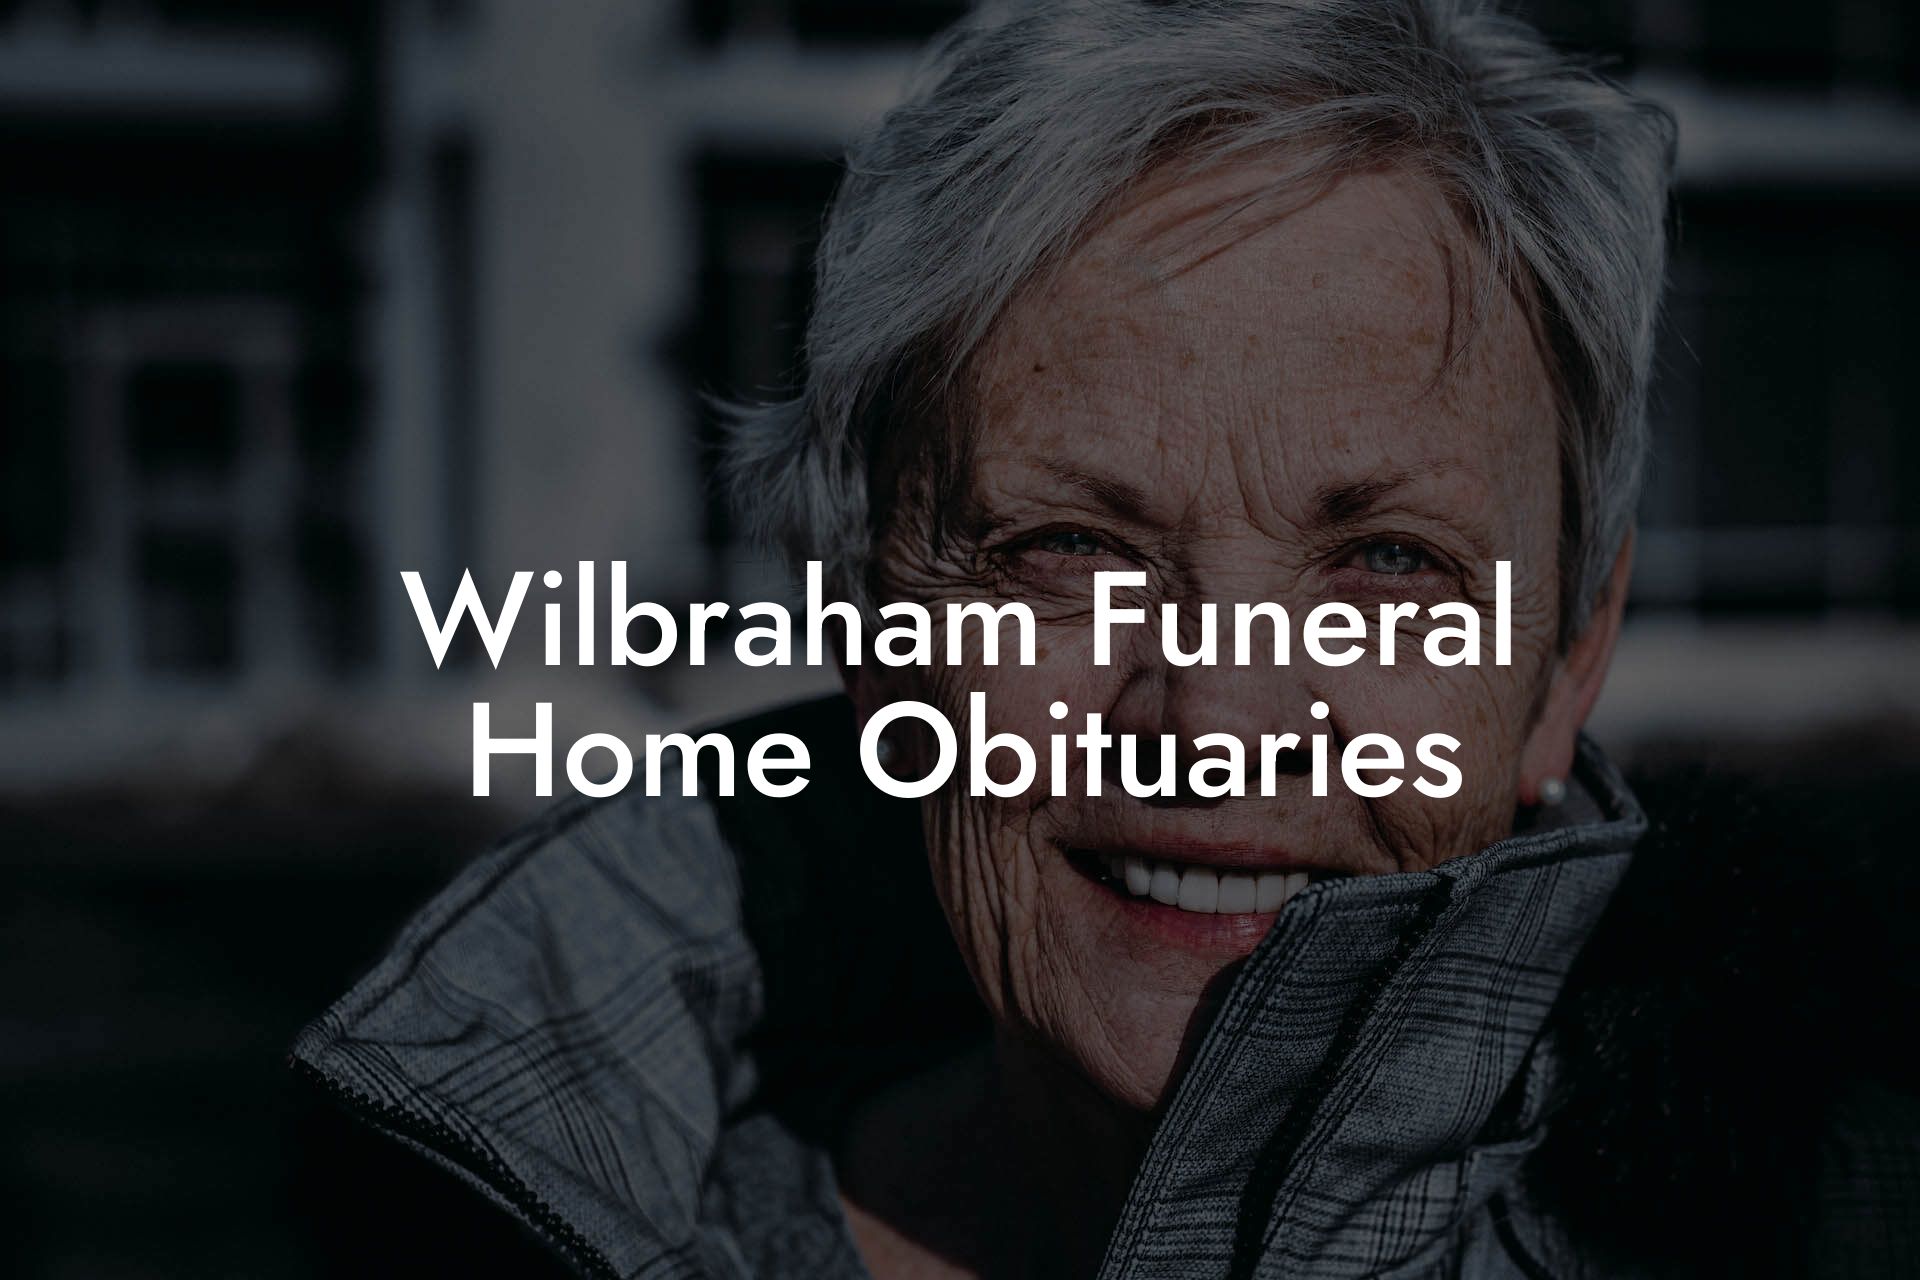 Wilbraham Funeral Home Obituaries